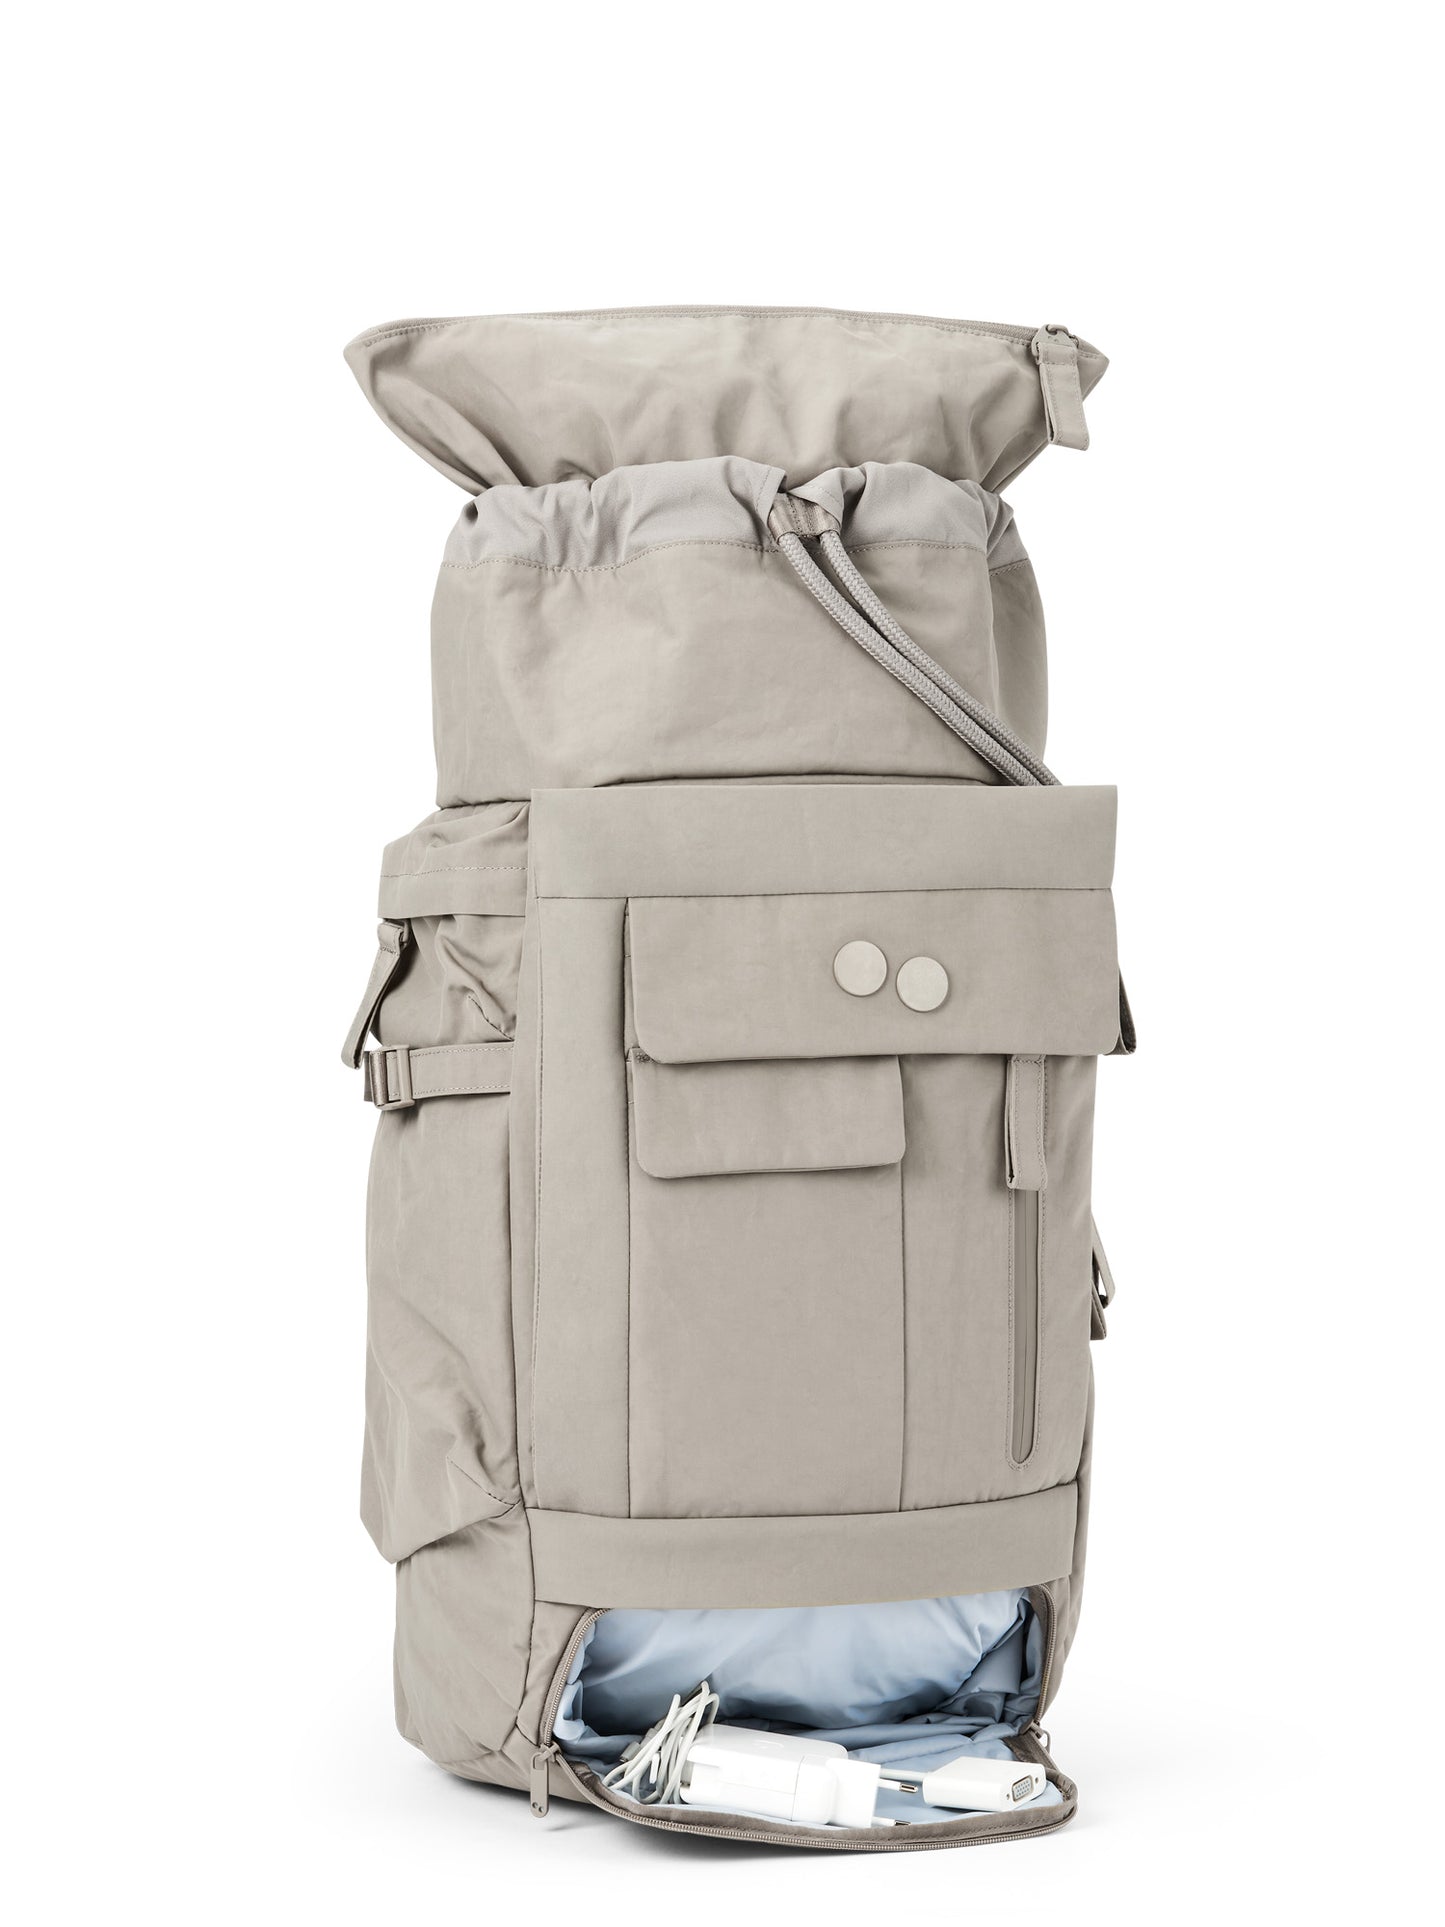 pinqponq-backpack-Blok-Medium-Crinkle-Taupe-open